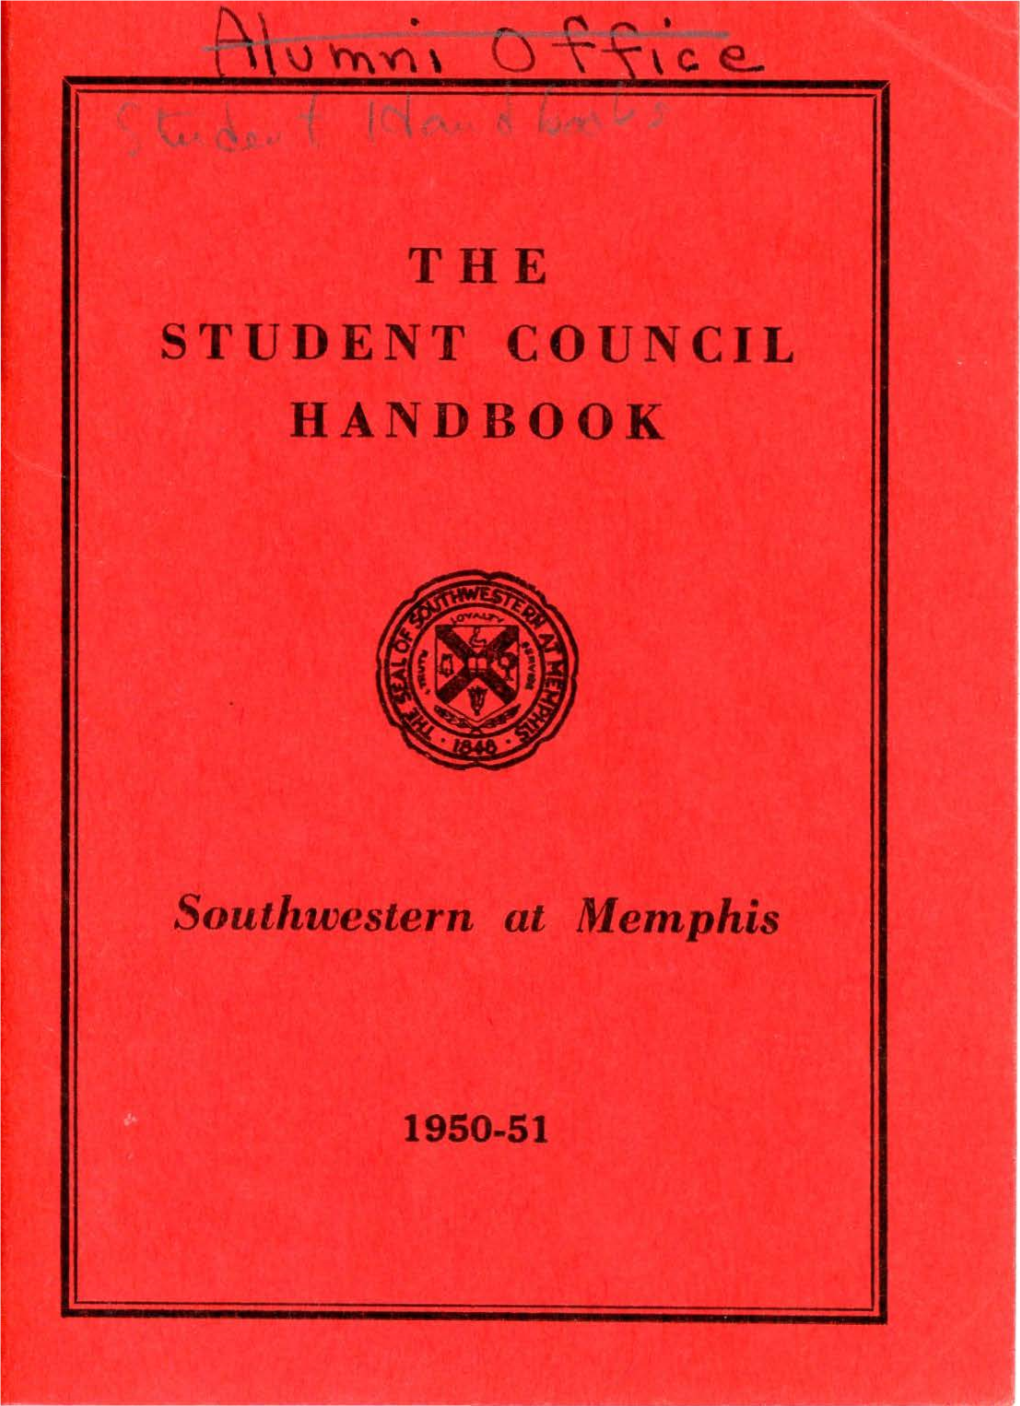 THE STUDENT COUNCIL HANDBOOK • Southwestern at Memphis